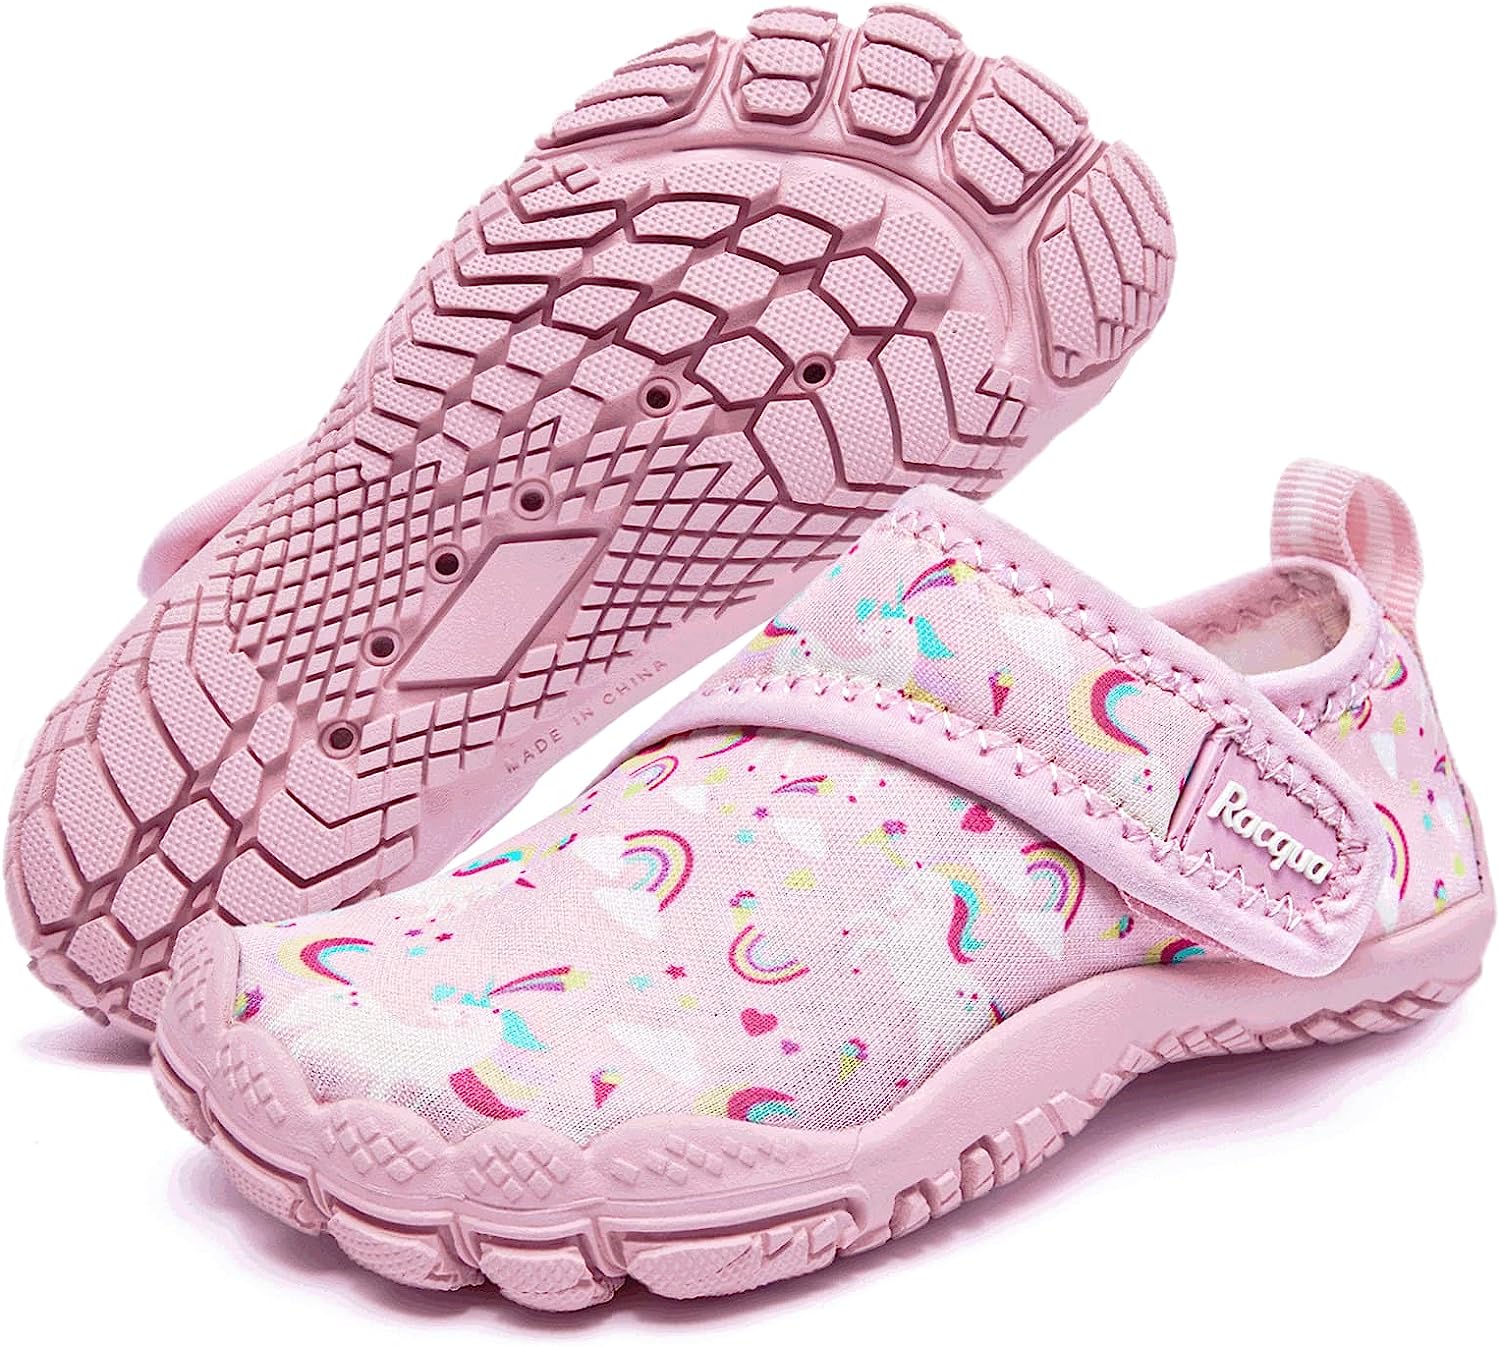 Racqua Toddler Boys Girls Slip-On Water Shoes Quick [...]